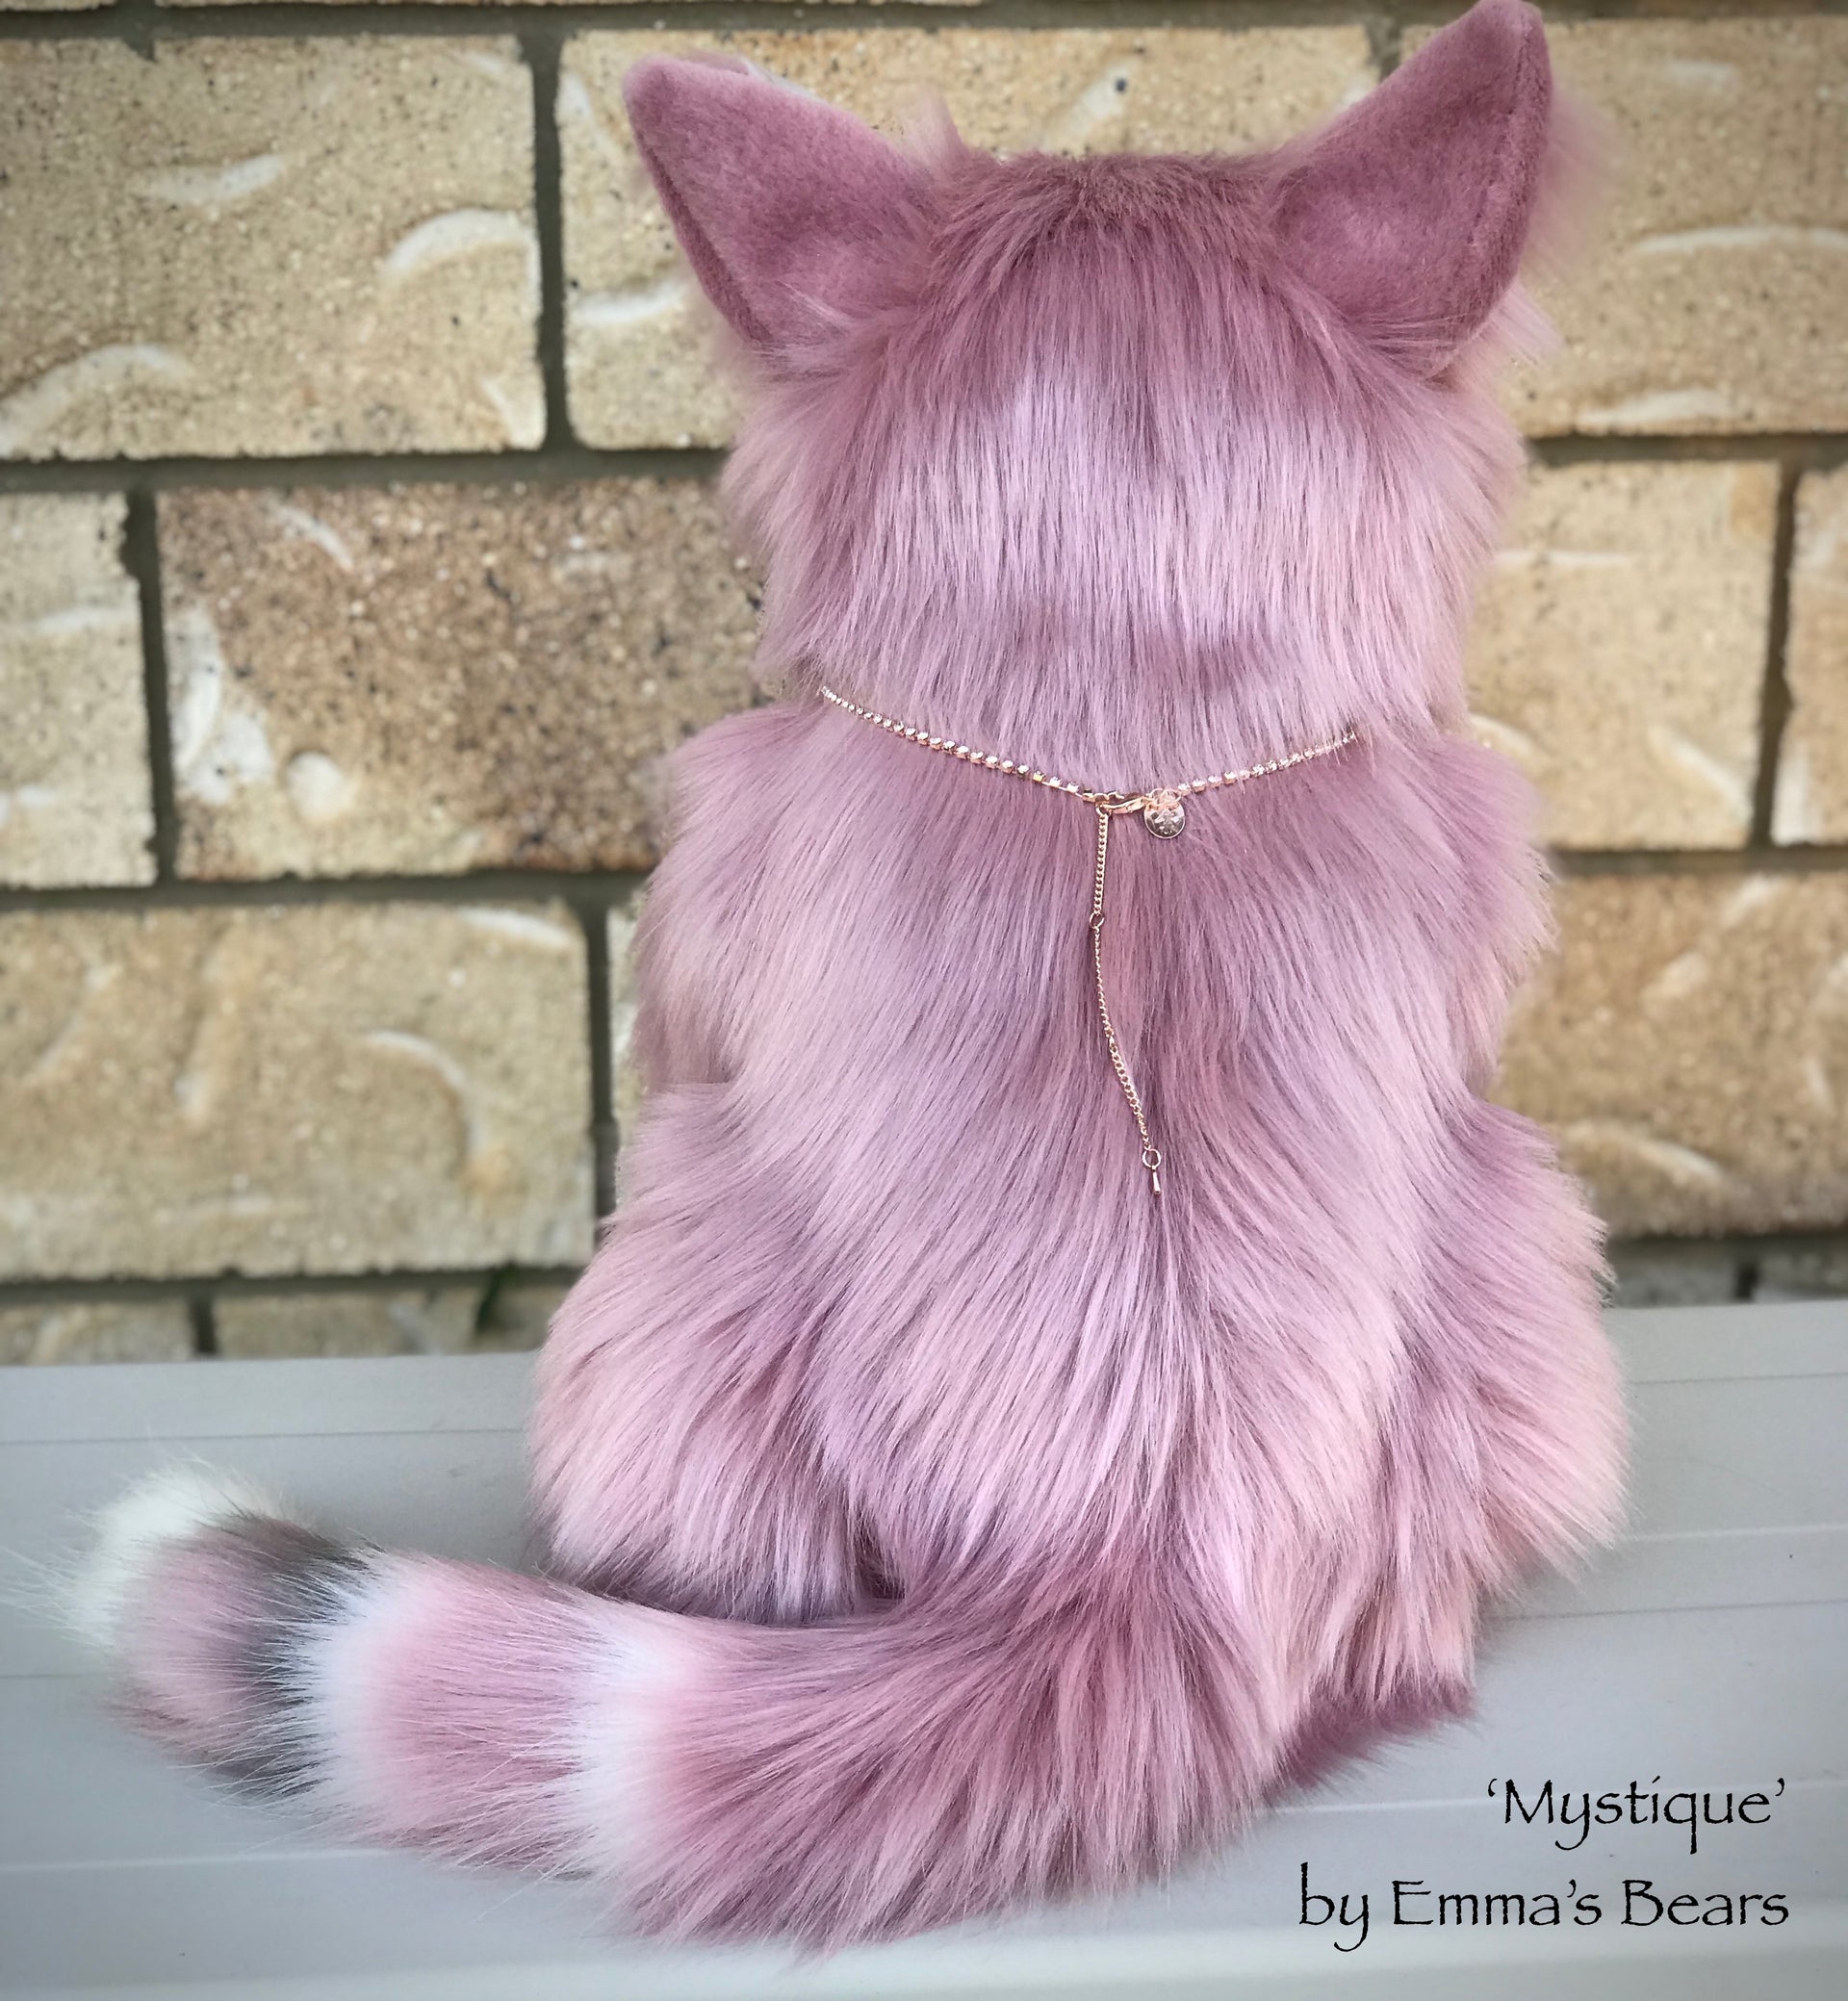 'Mystique' - life-size 15" faux fur artist cat by Emma's Bears